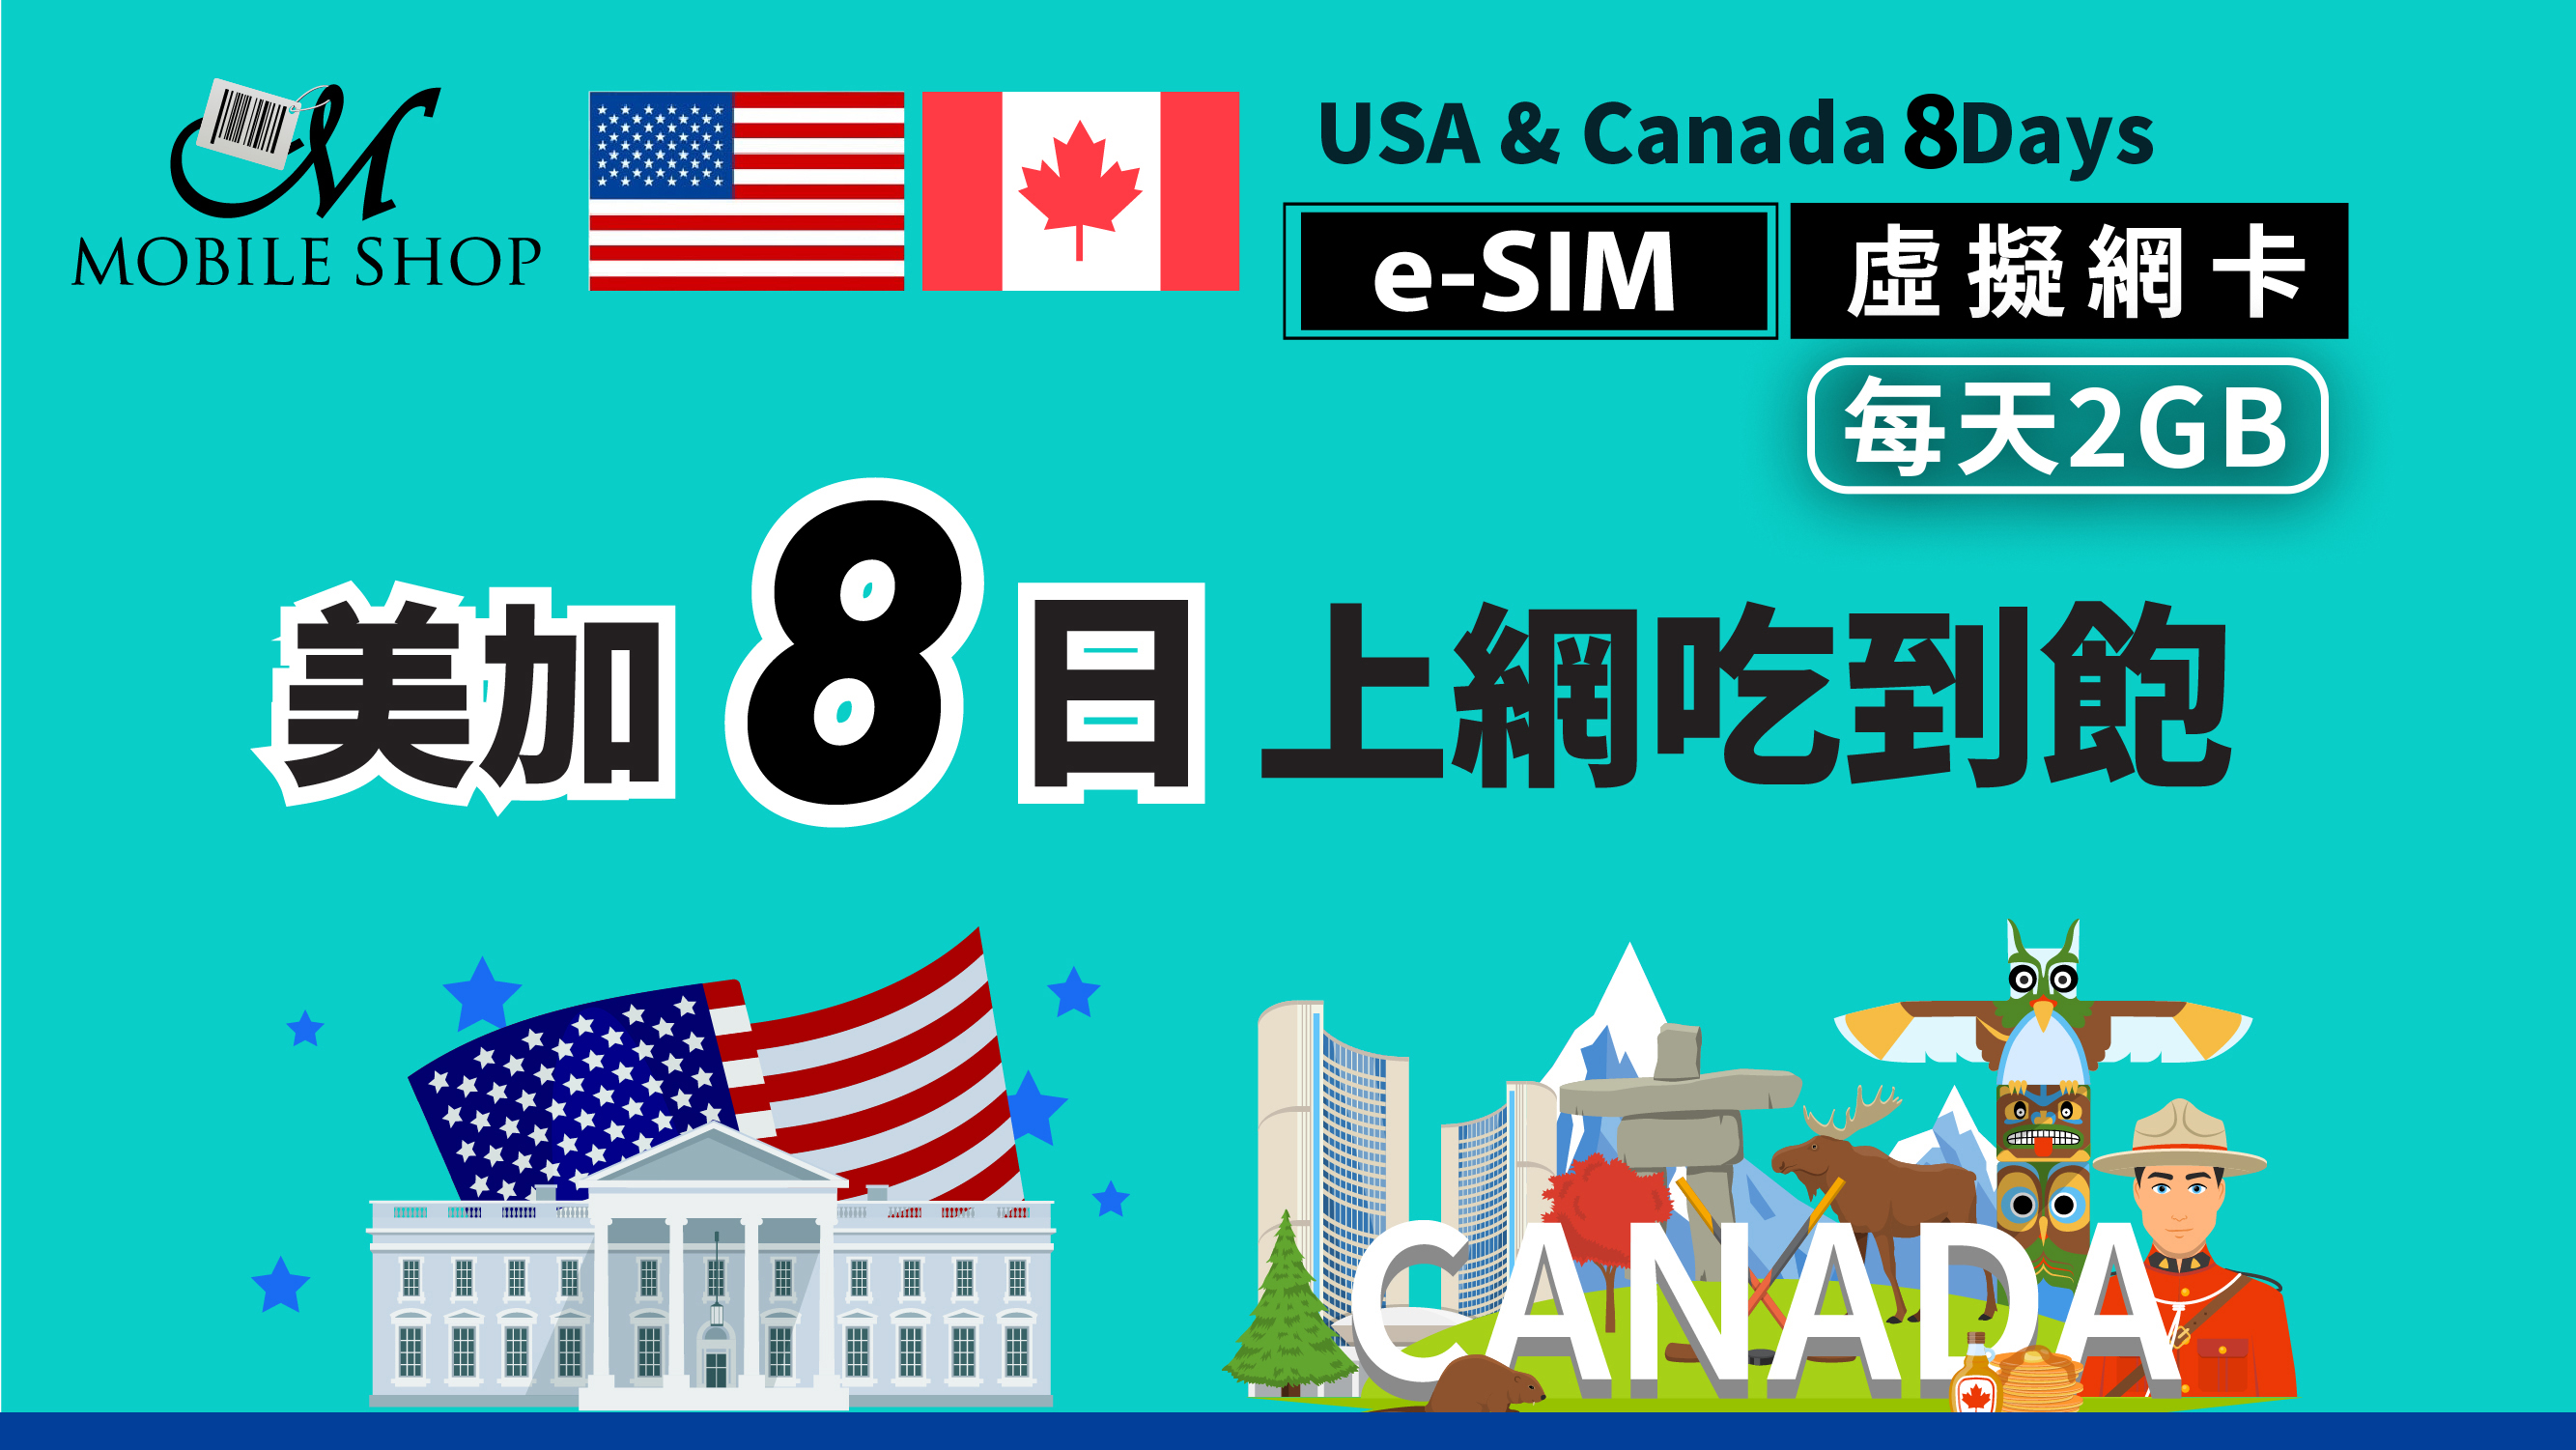 e-SIM_U.S./Canada 8 Days/2GB per day unlimited data